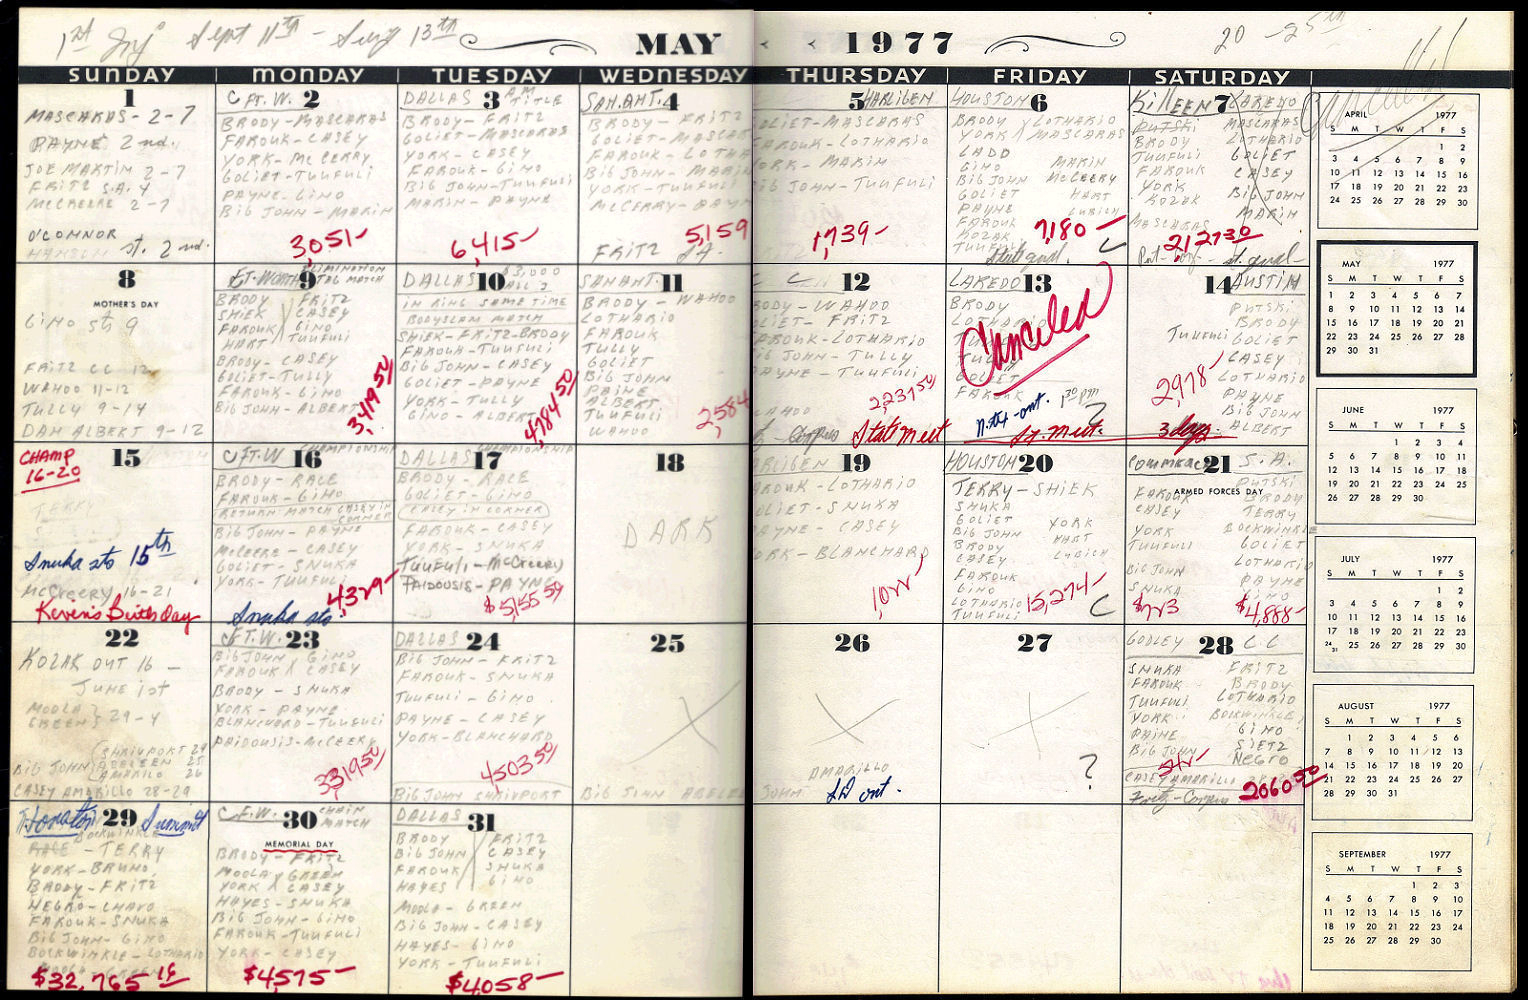 World Class Memories: Memorabilia: 1977 Booking Calendar